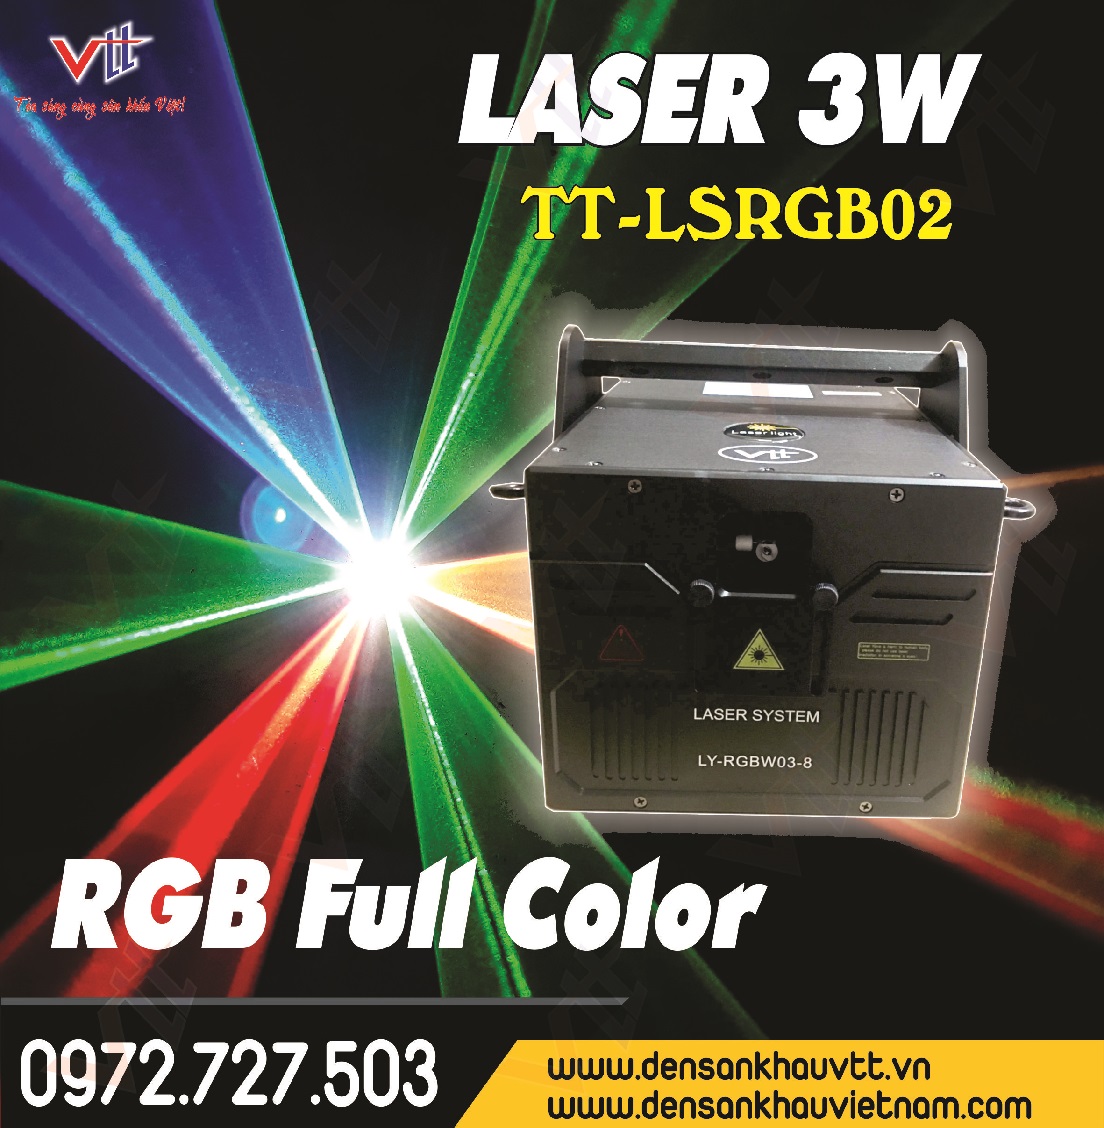 3W FULL COLOR LASER LIGHT TT-LSRGB02